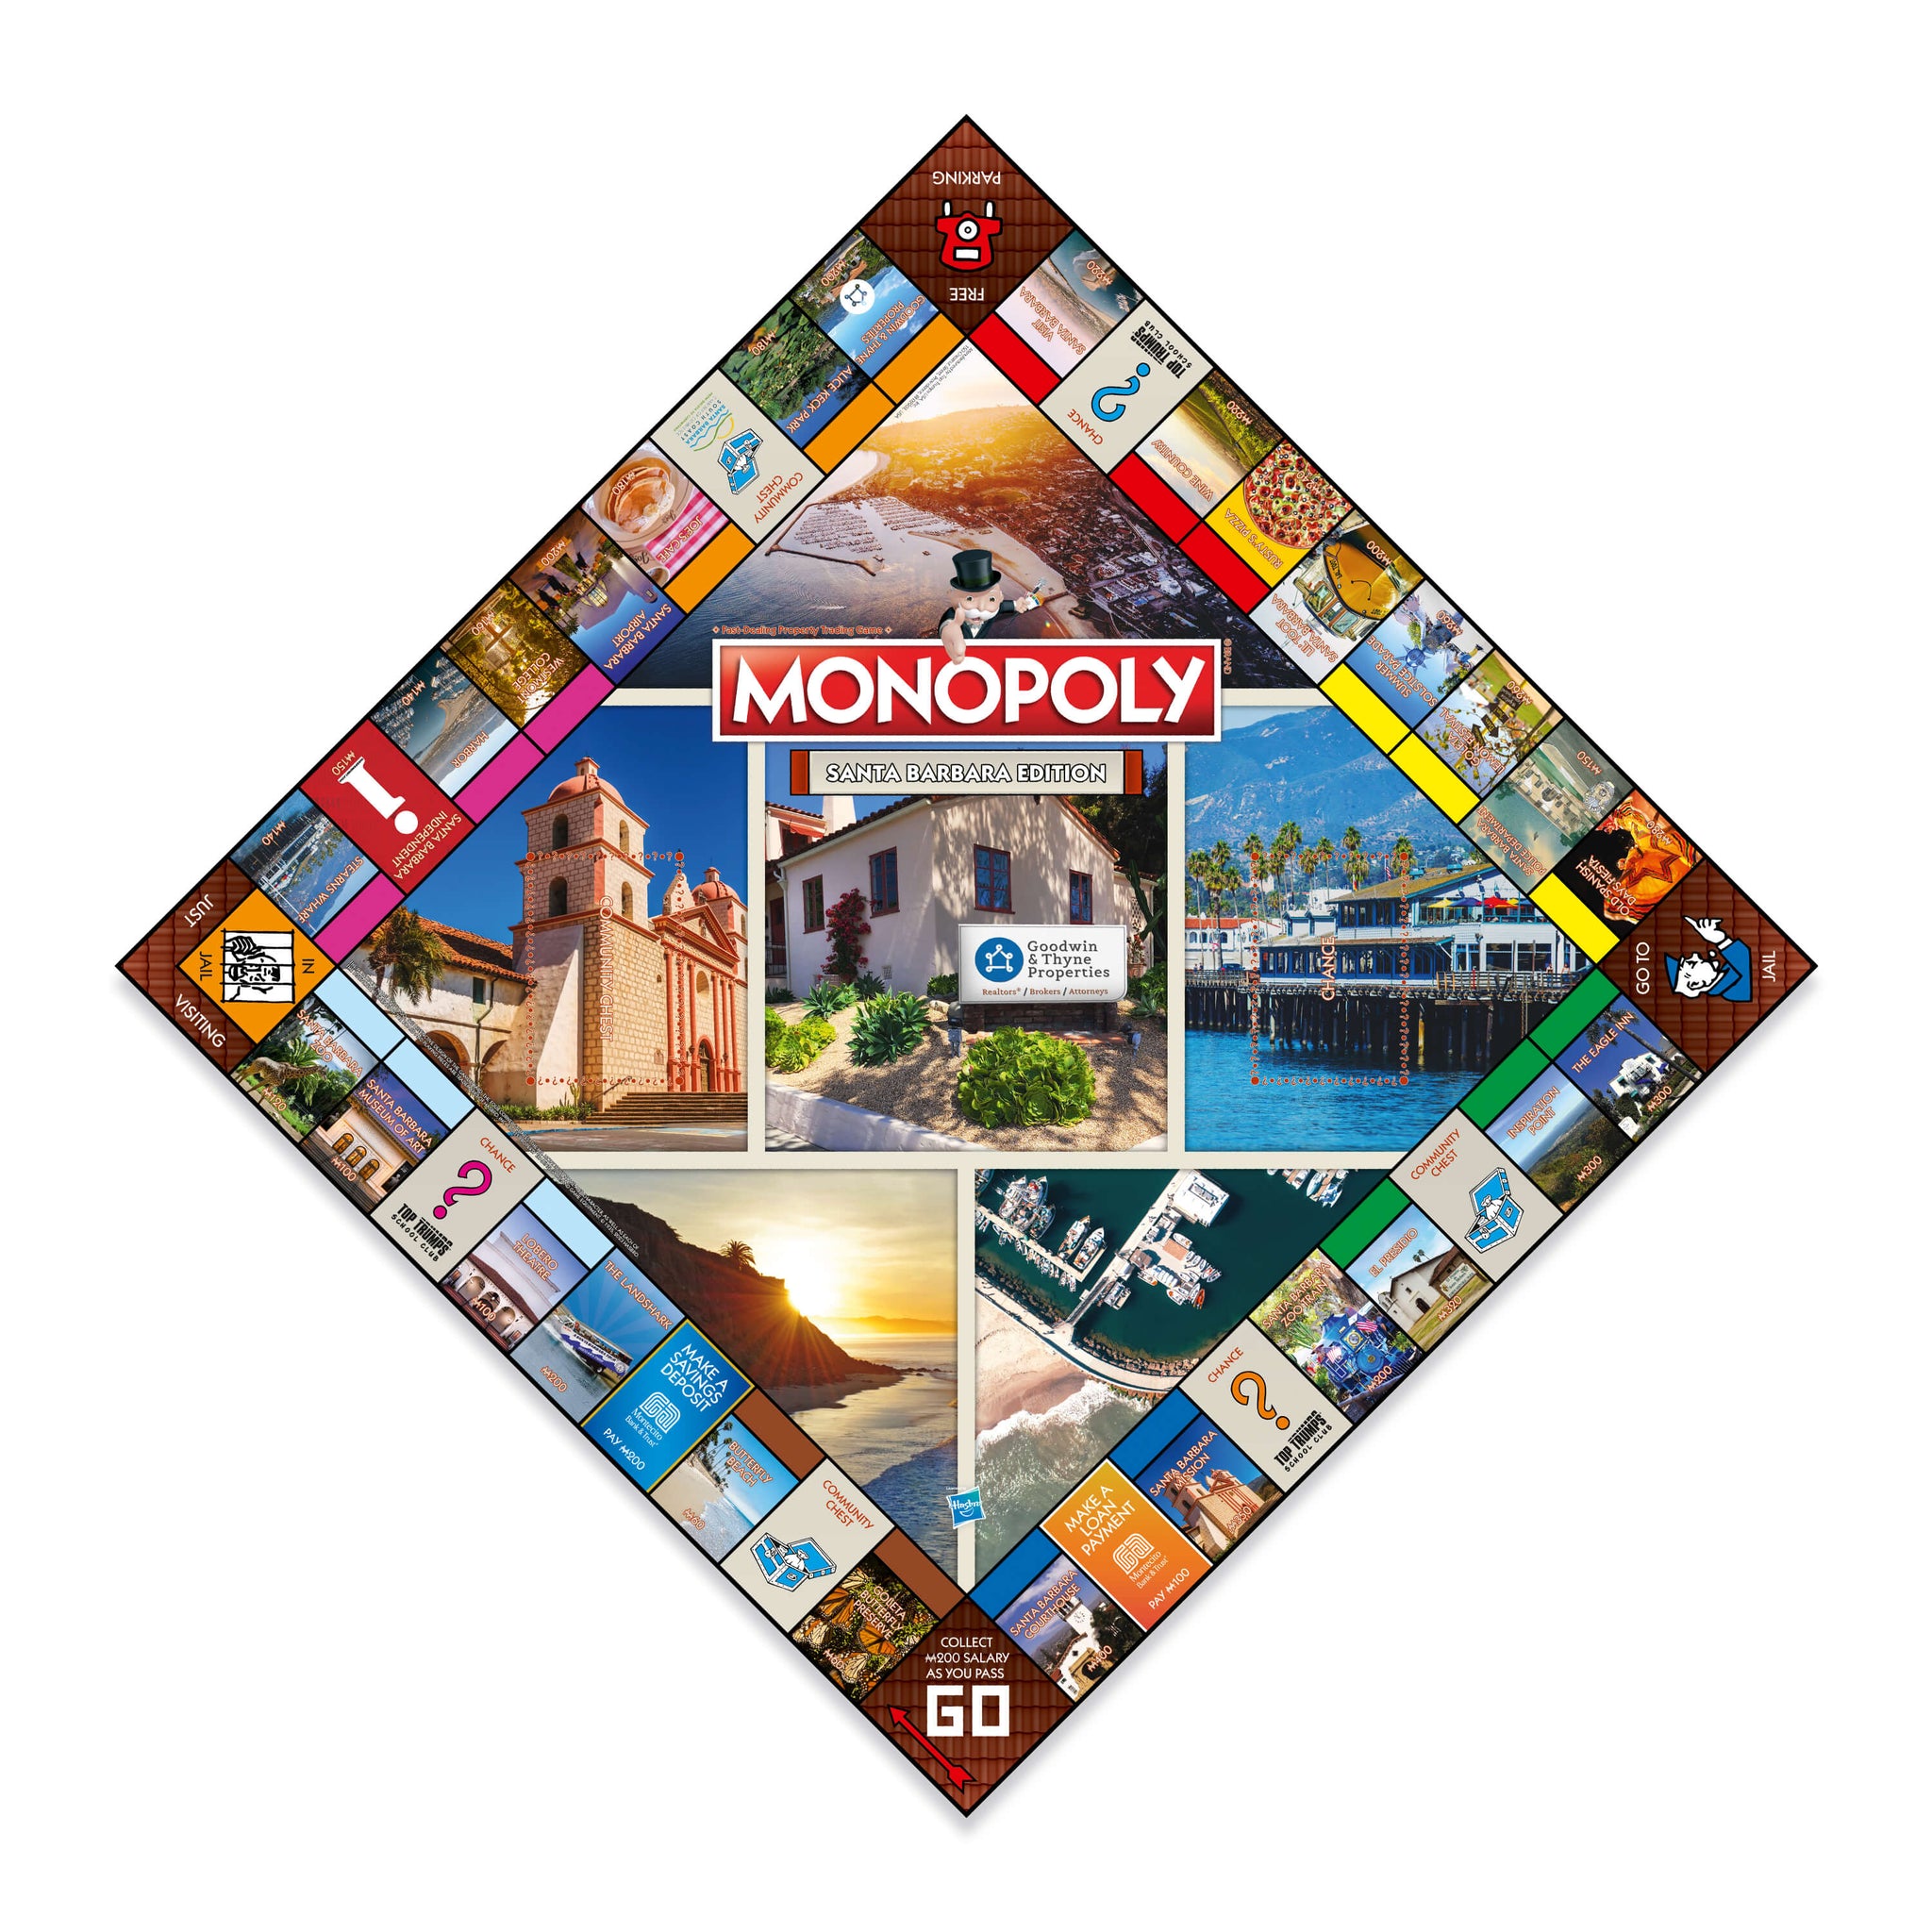 Huntington Beach Edition Monopoly Board Game